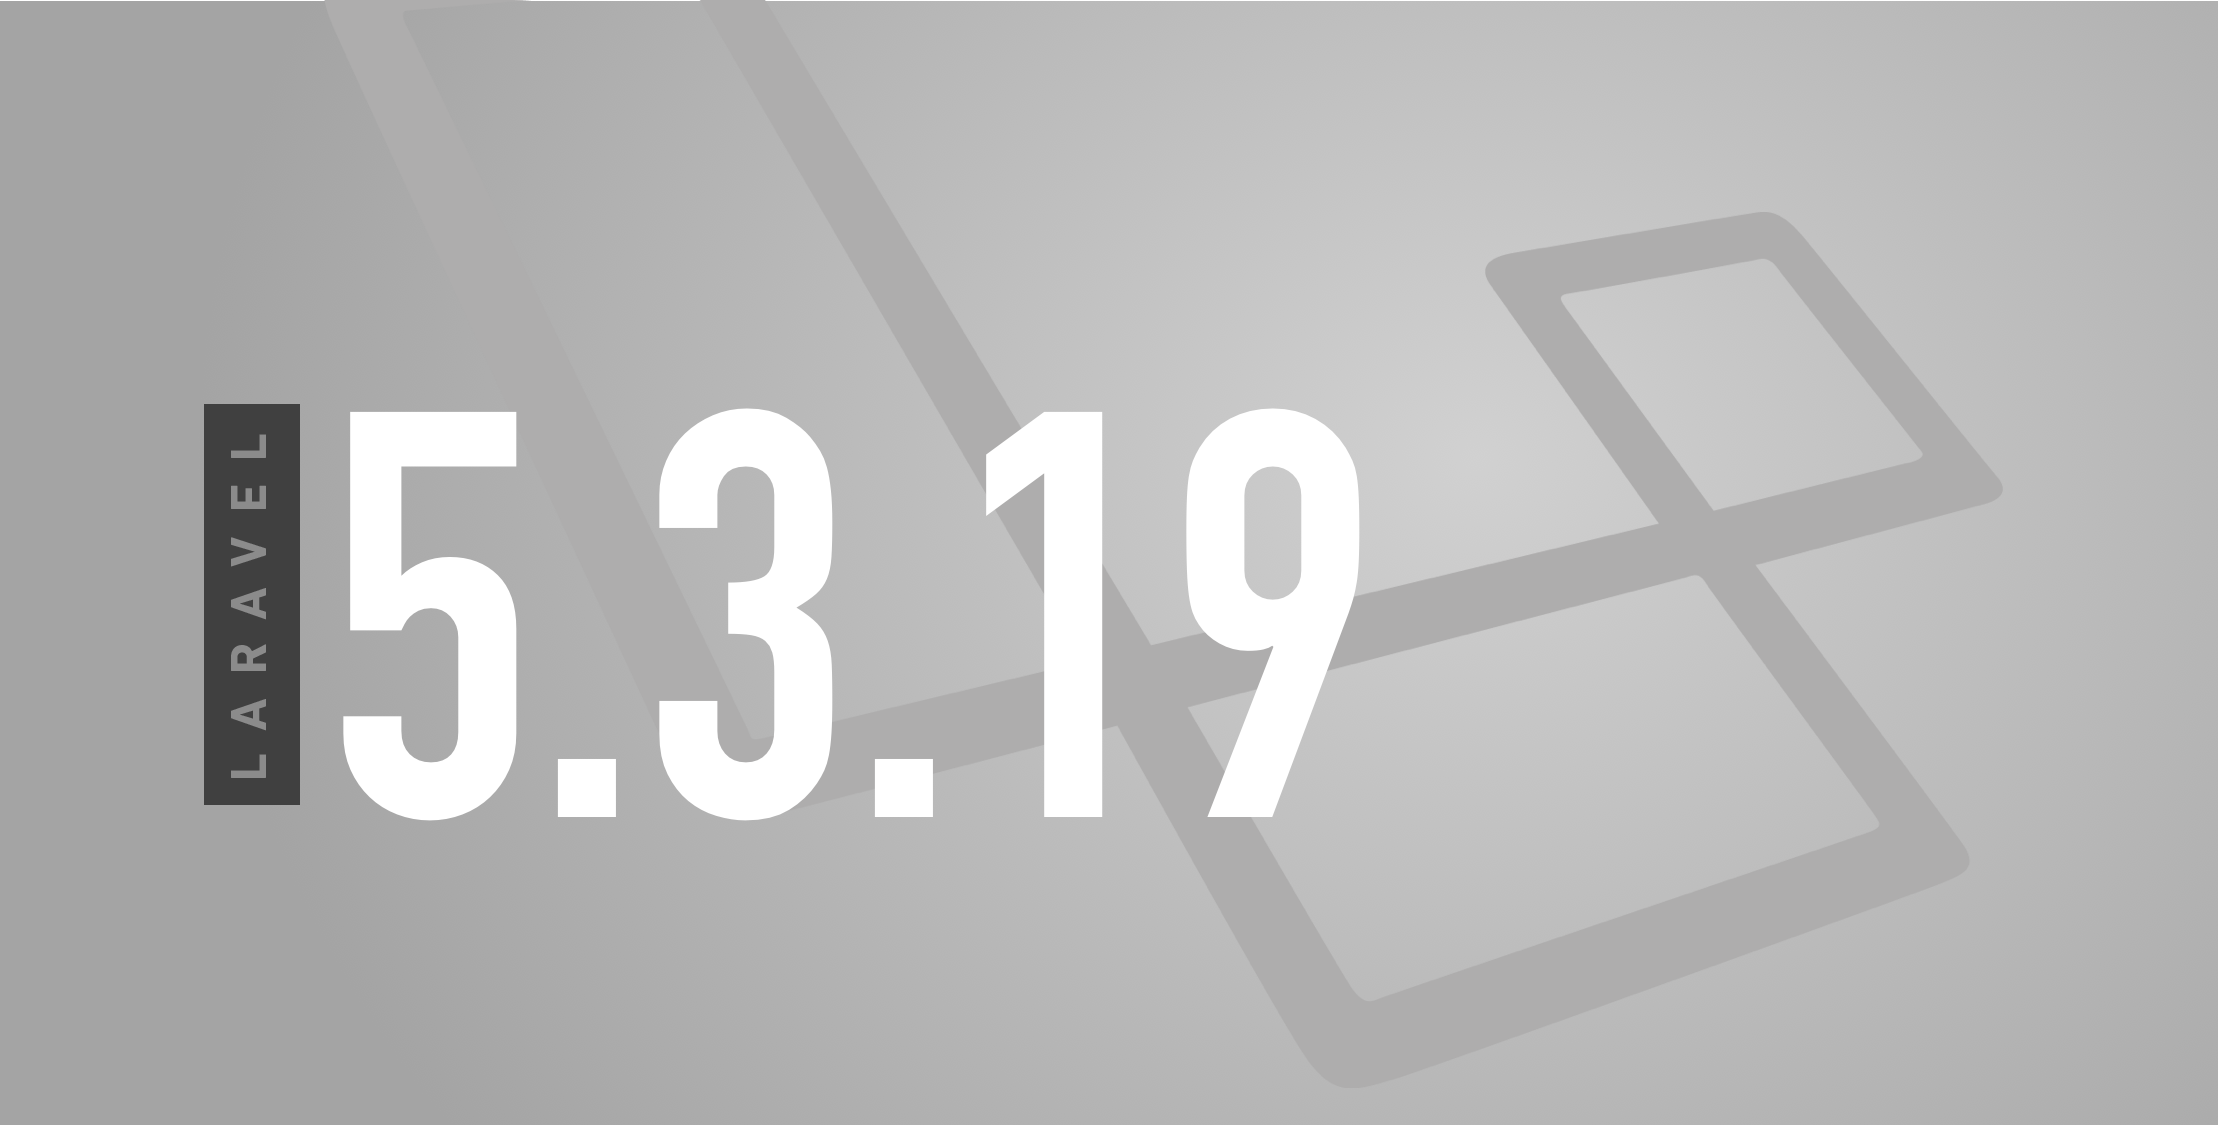 Laravel v5.3.19 is now released image